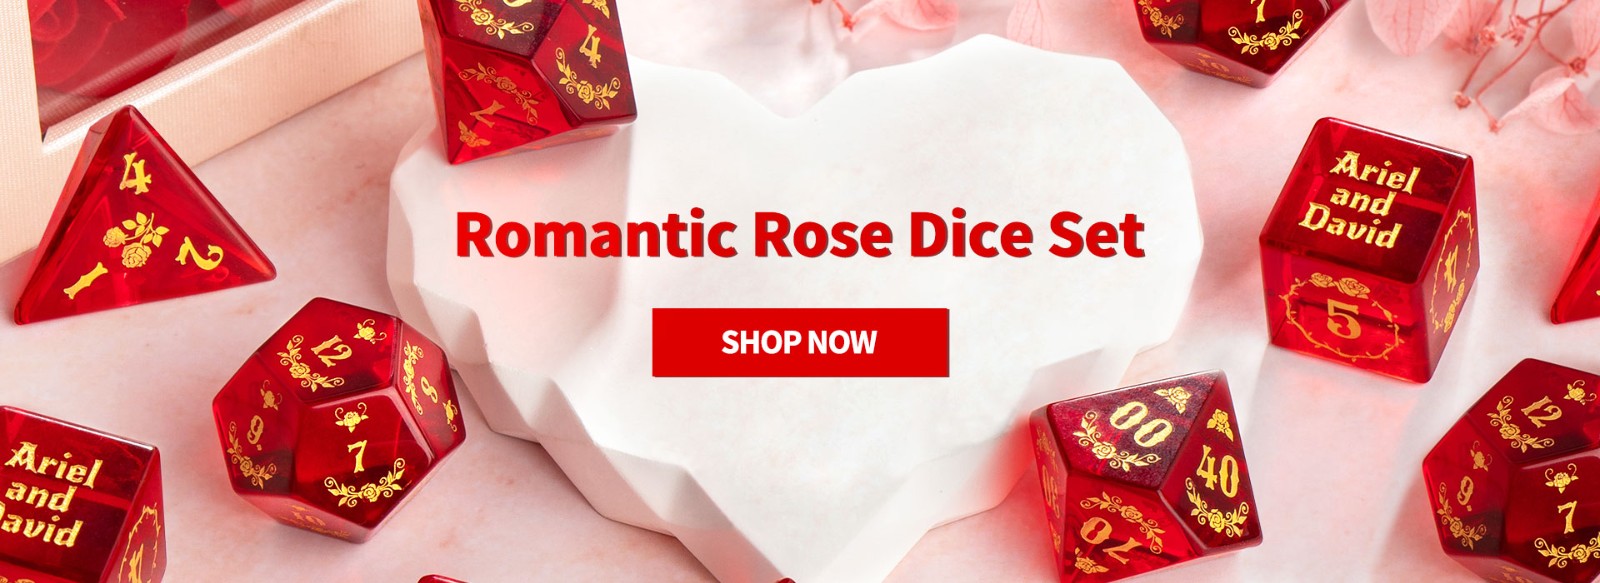 RED GLASS ROMANTIC ROSE DICE